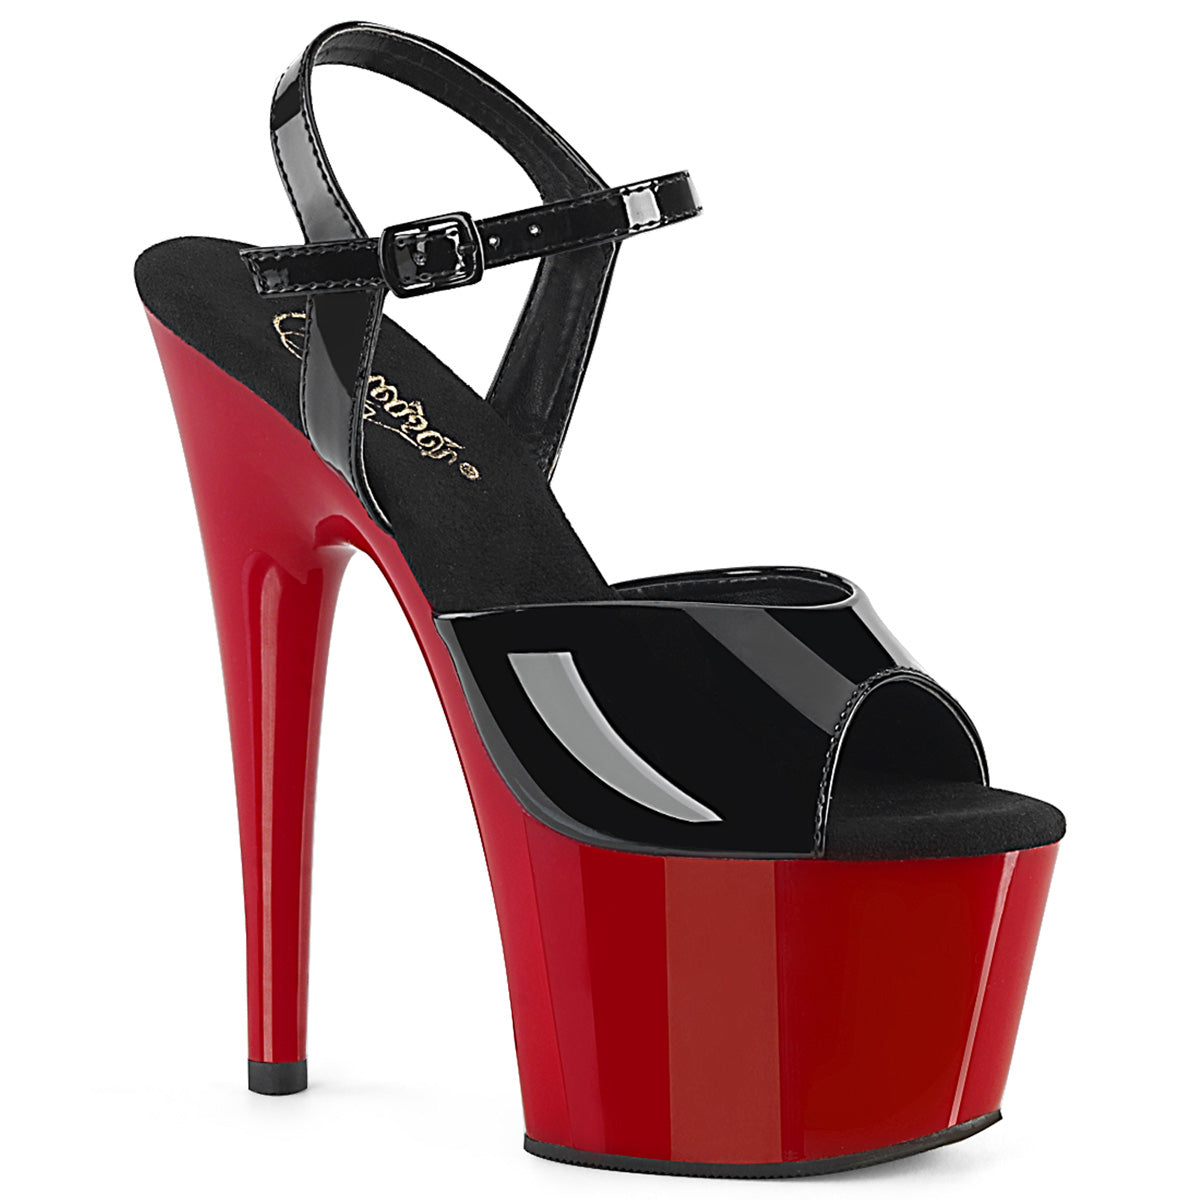 ADORE-709 7 Inch Heel Black Patent Red Pole Dancer Platform Shoes